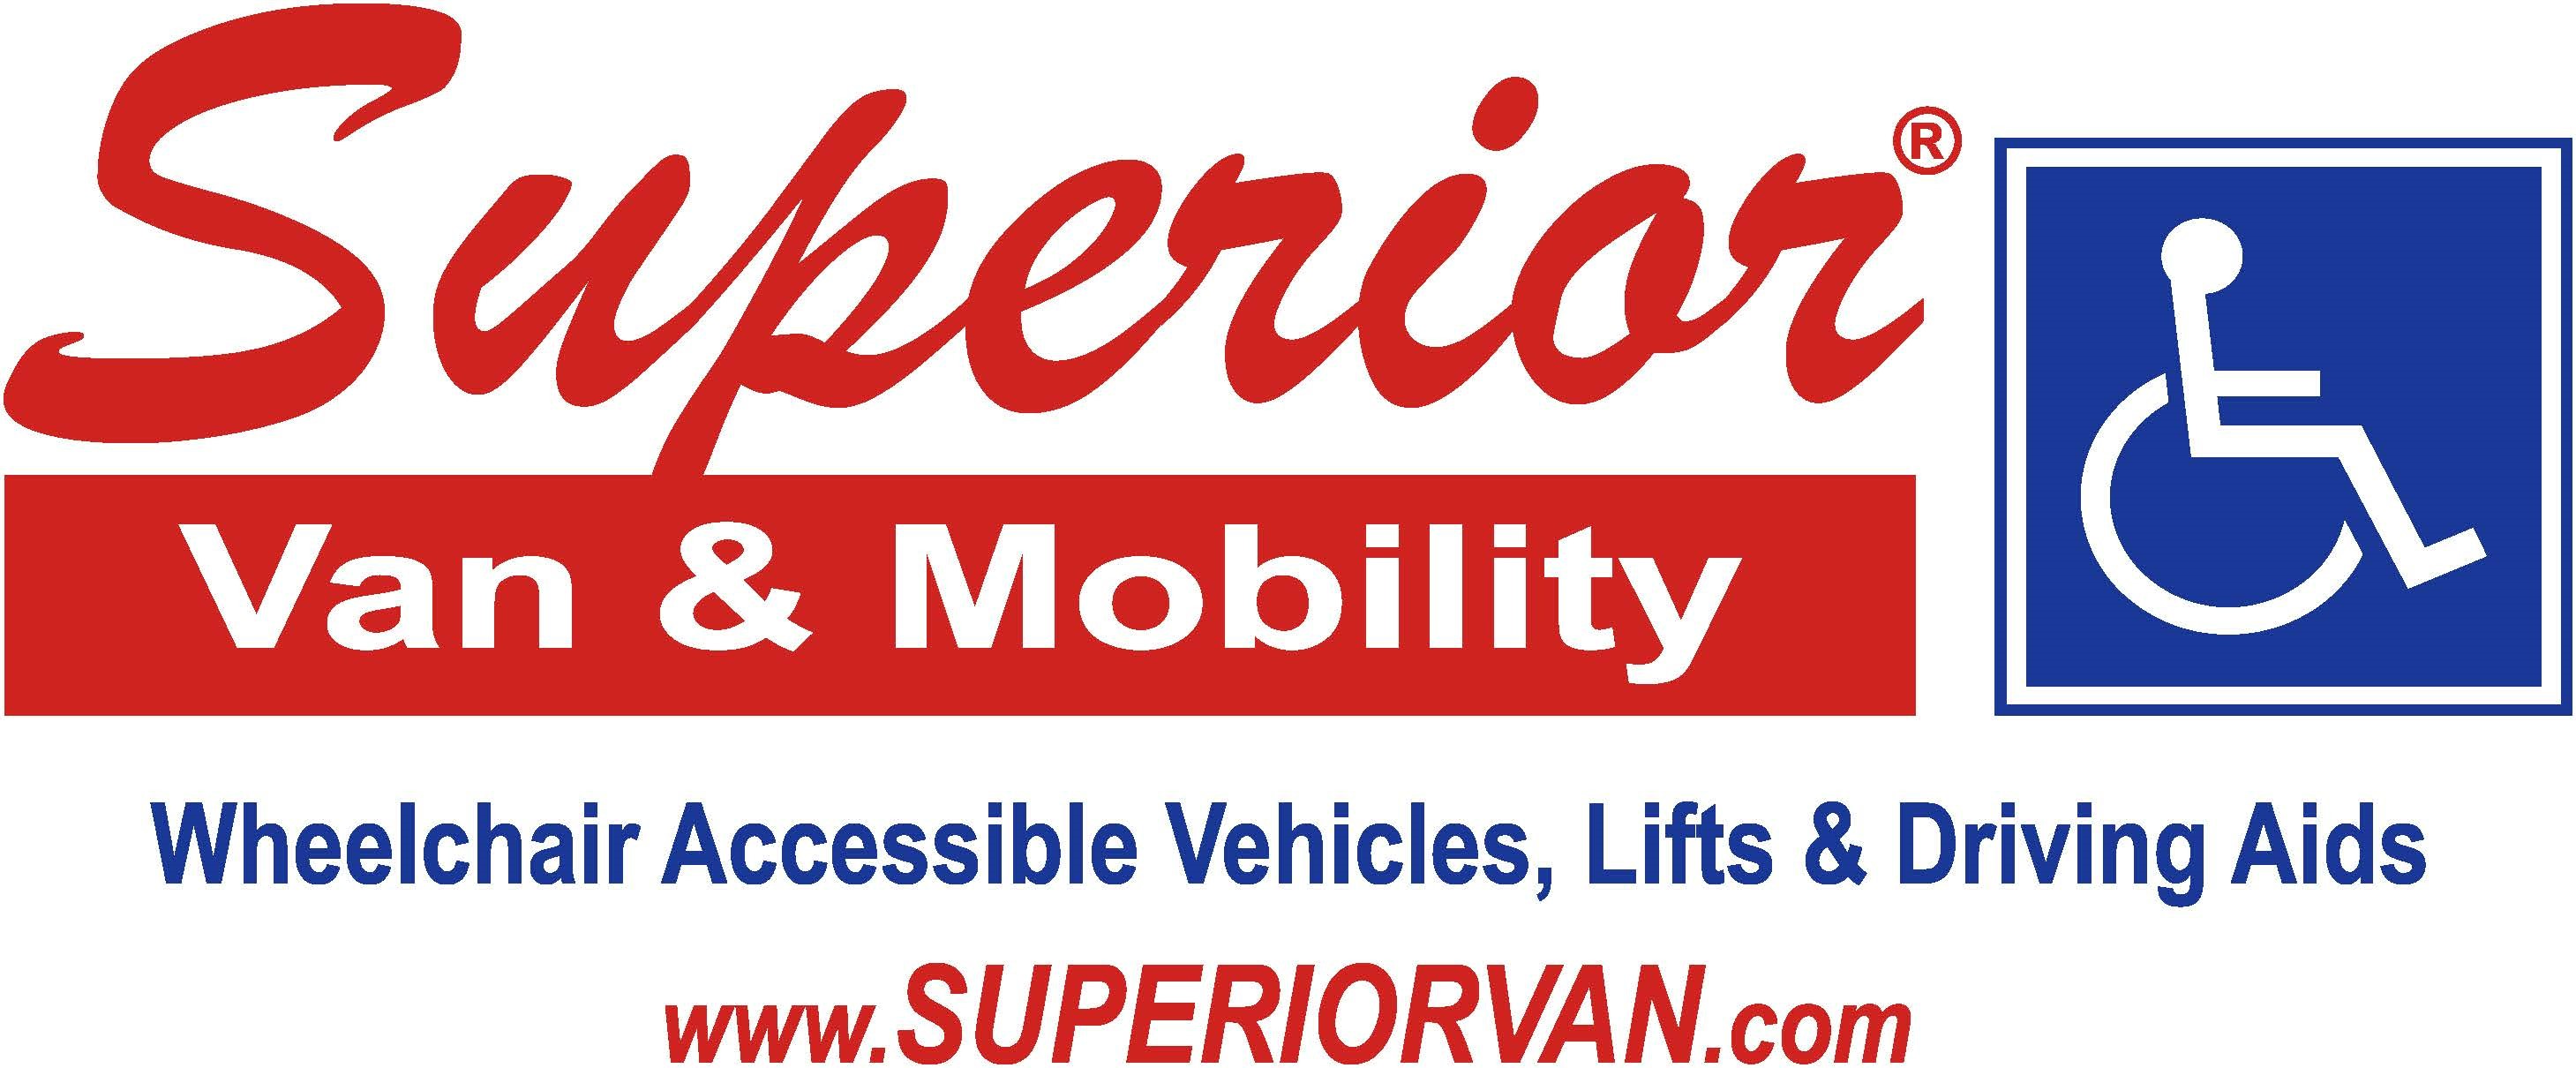 Superior Van & Mobility